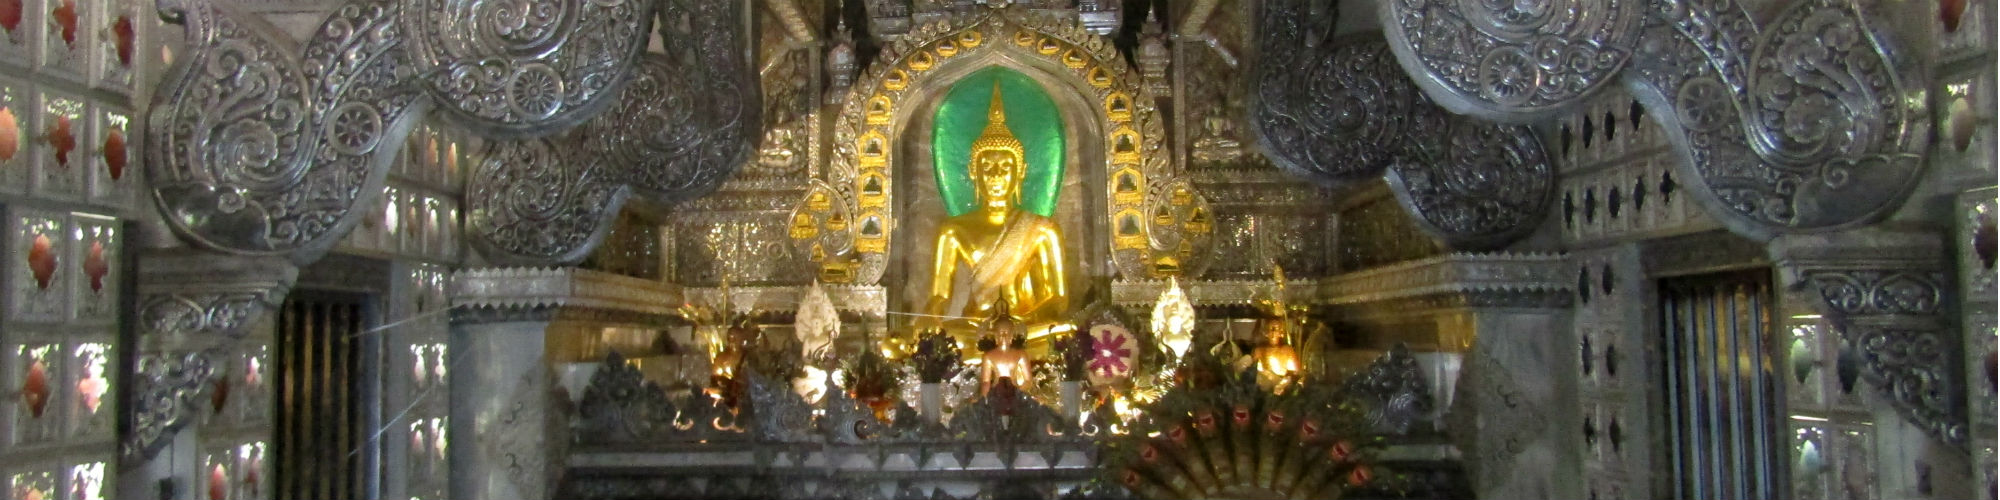 Wat Sri Suphan (Silver Temple), Chiang Mai